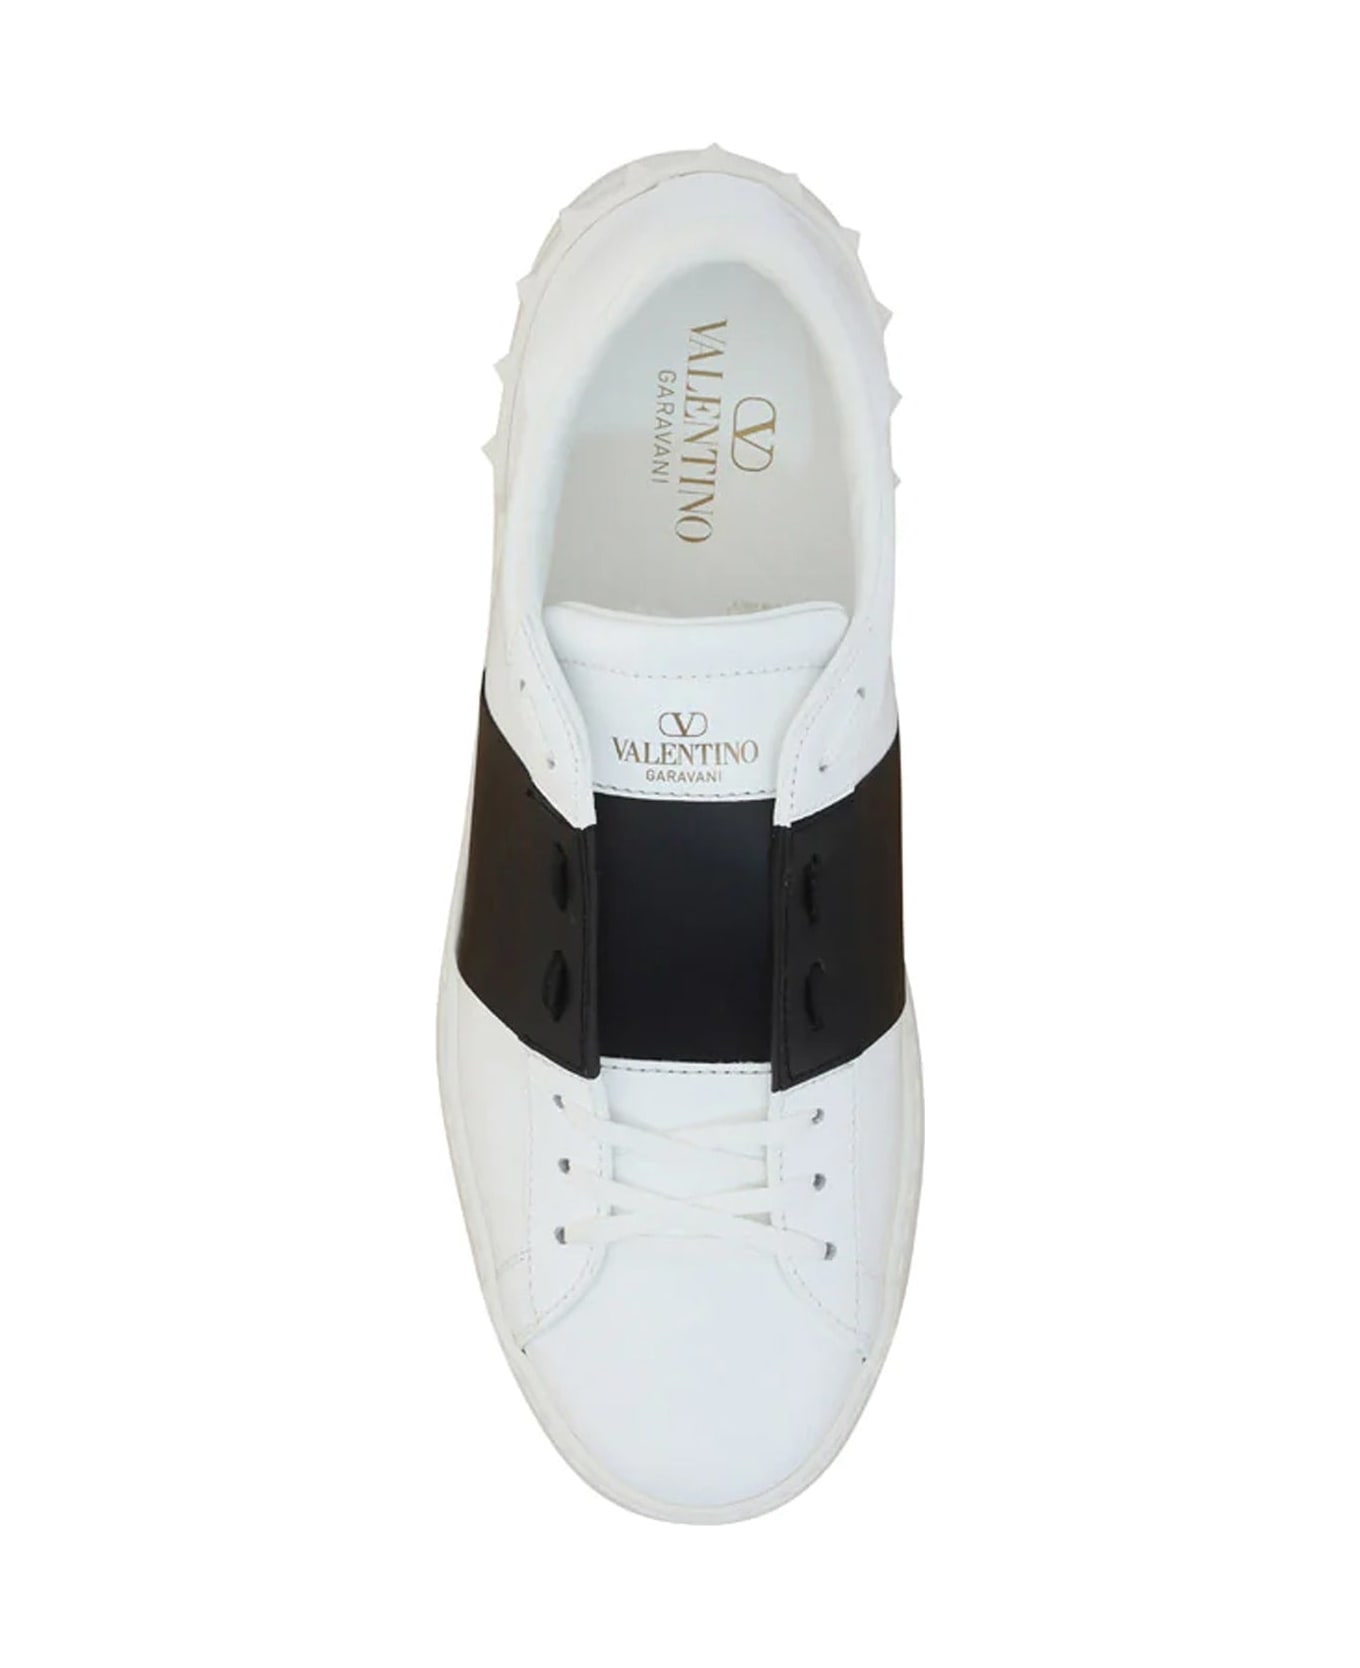 Valentino Garavani Garavani Open Leather Sneakers - White